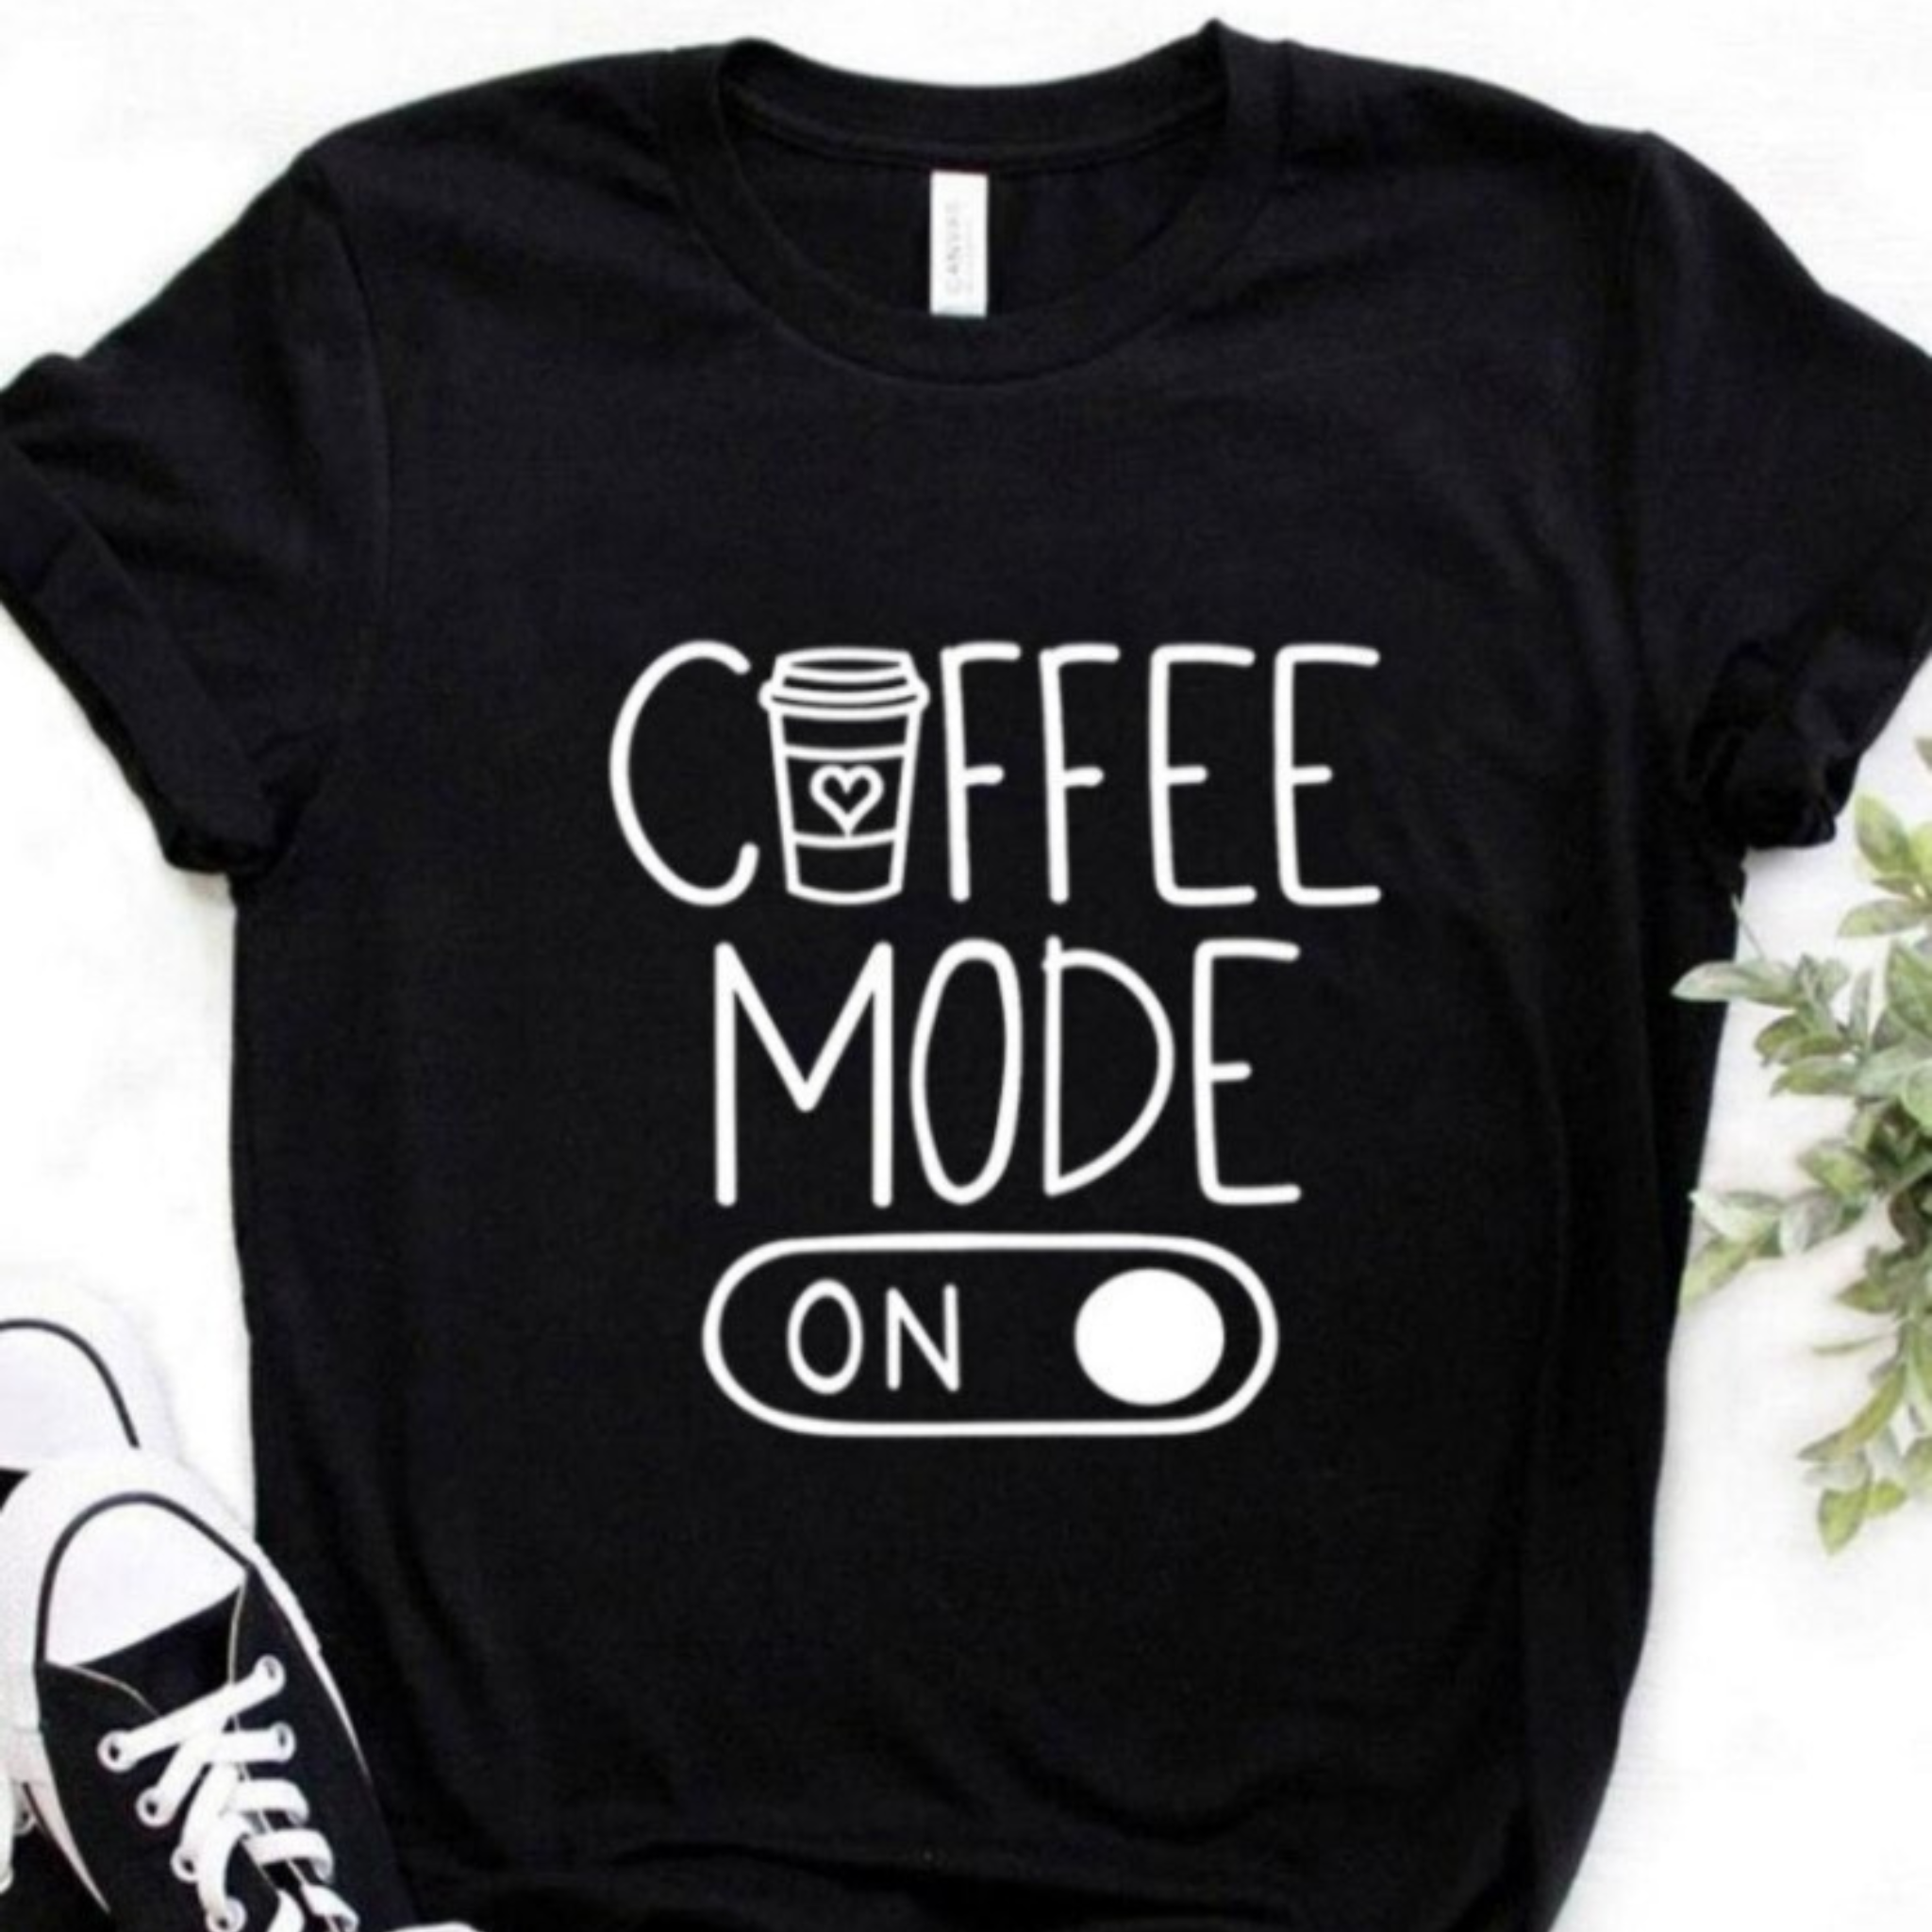 Coffee Mode On Women T-Shirt